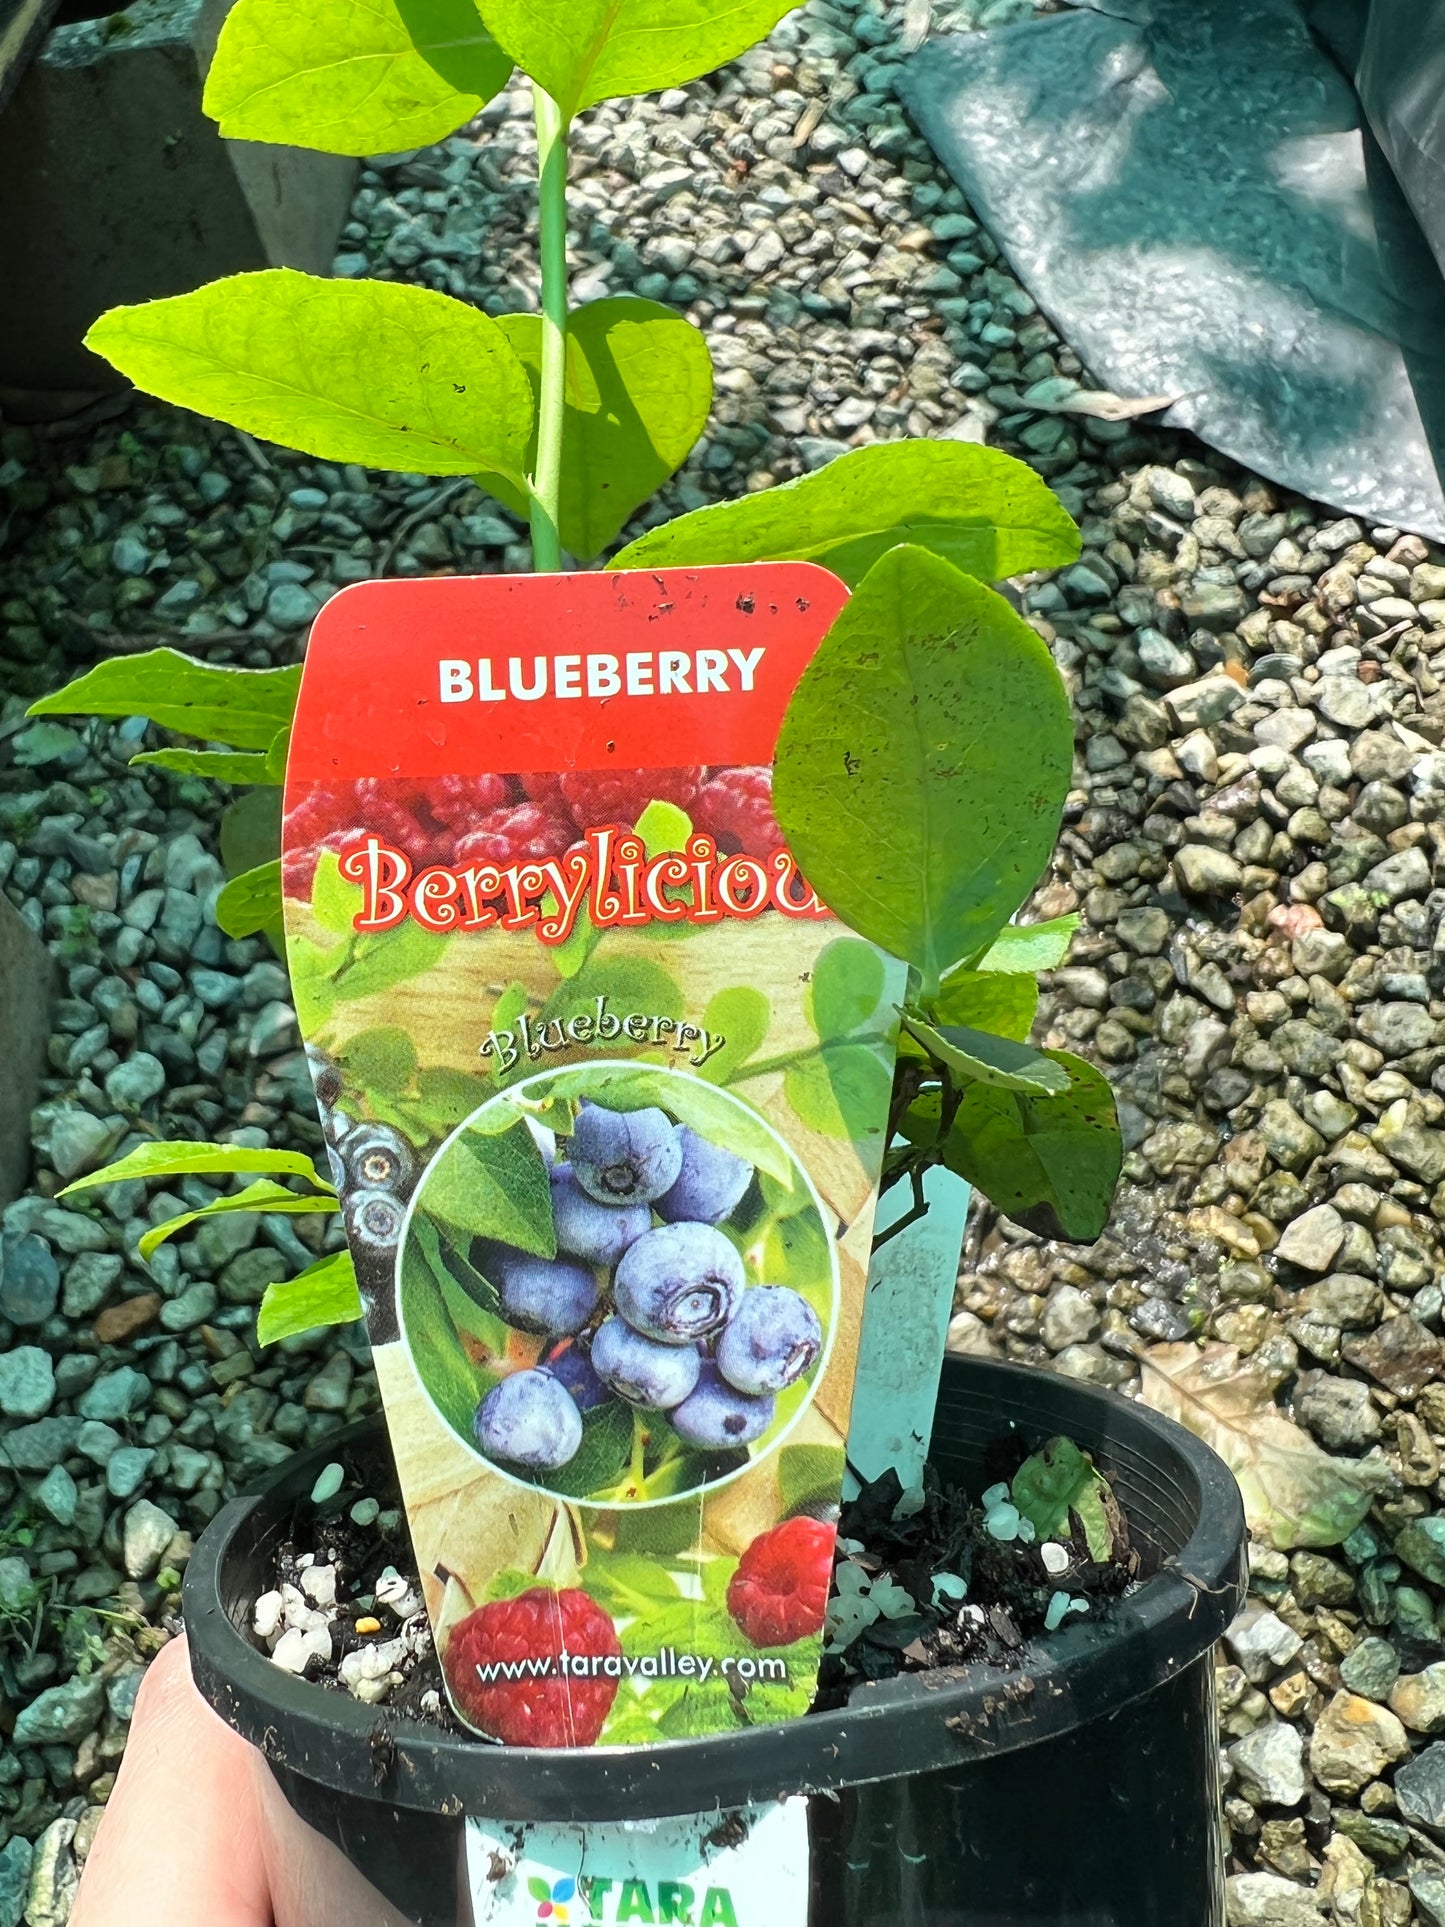 Blueberry - Sharpblue